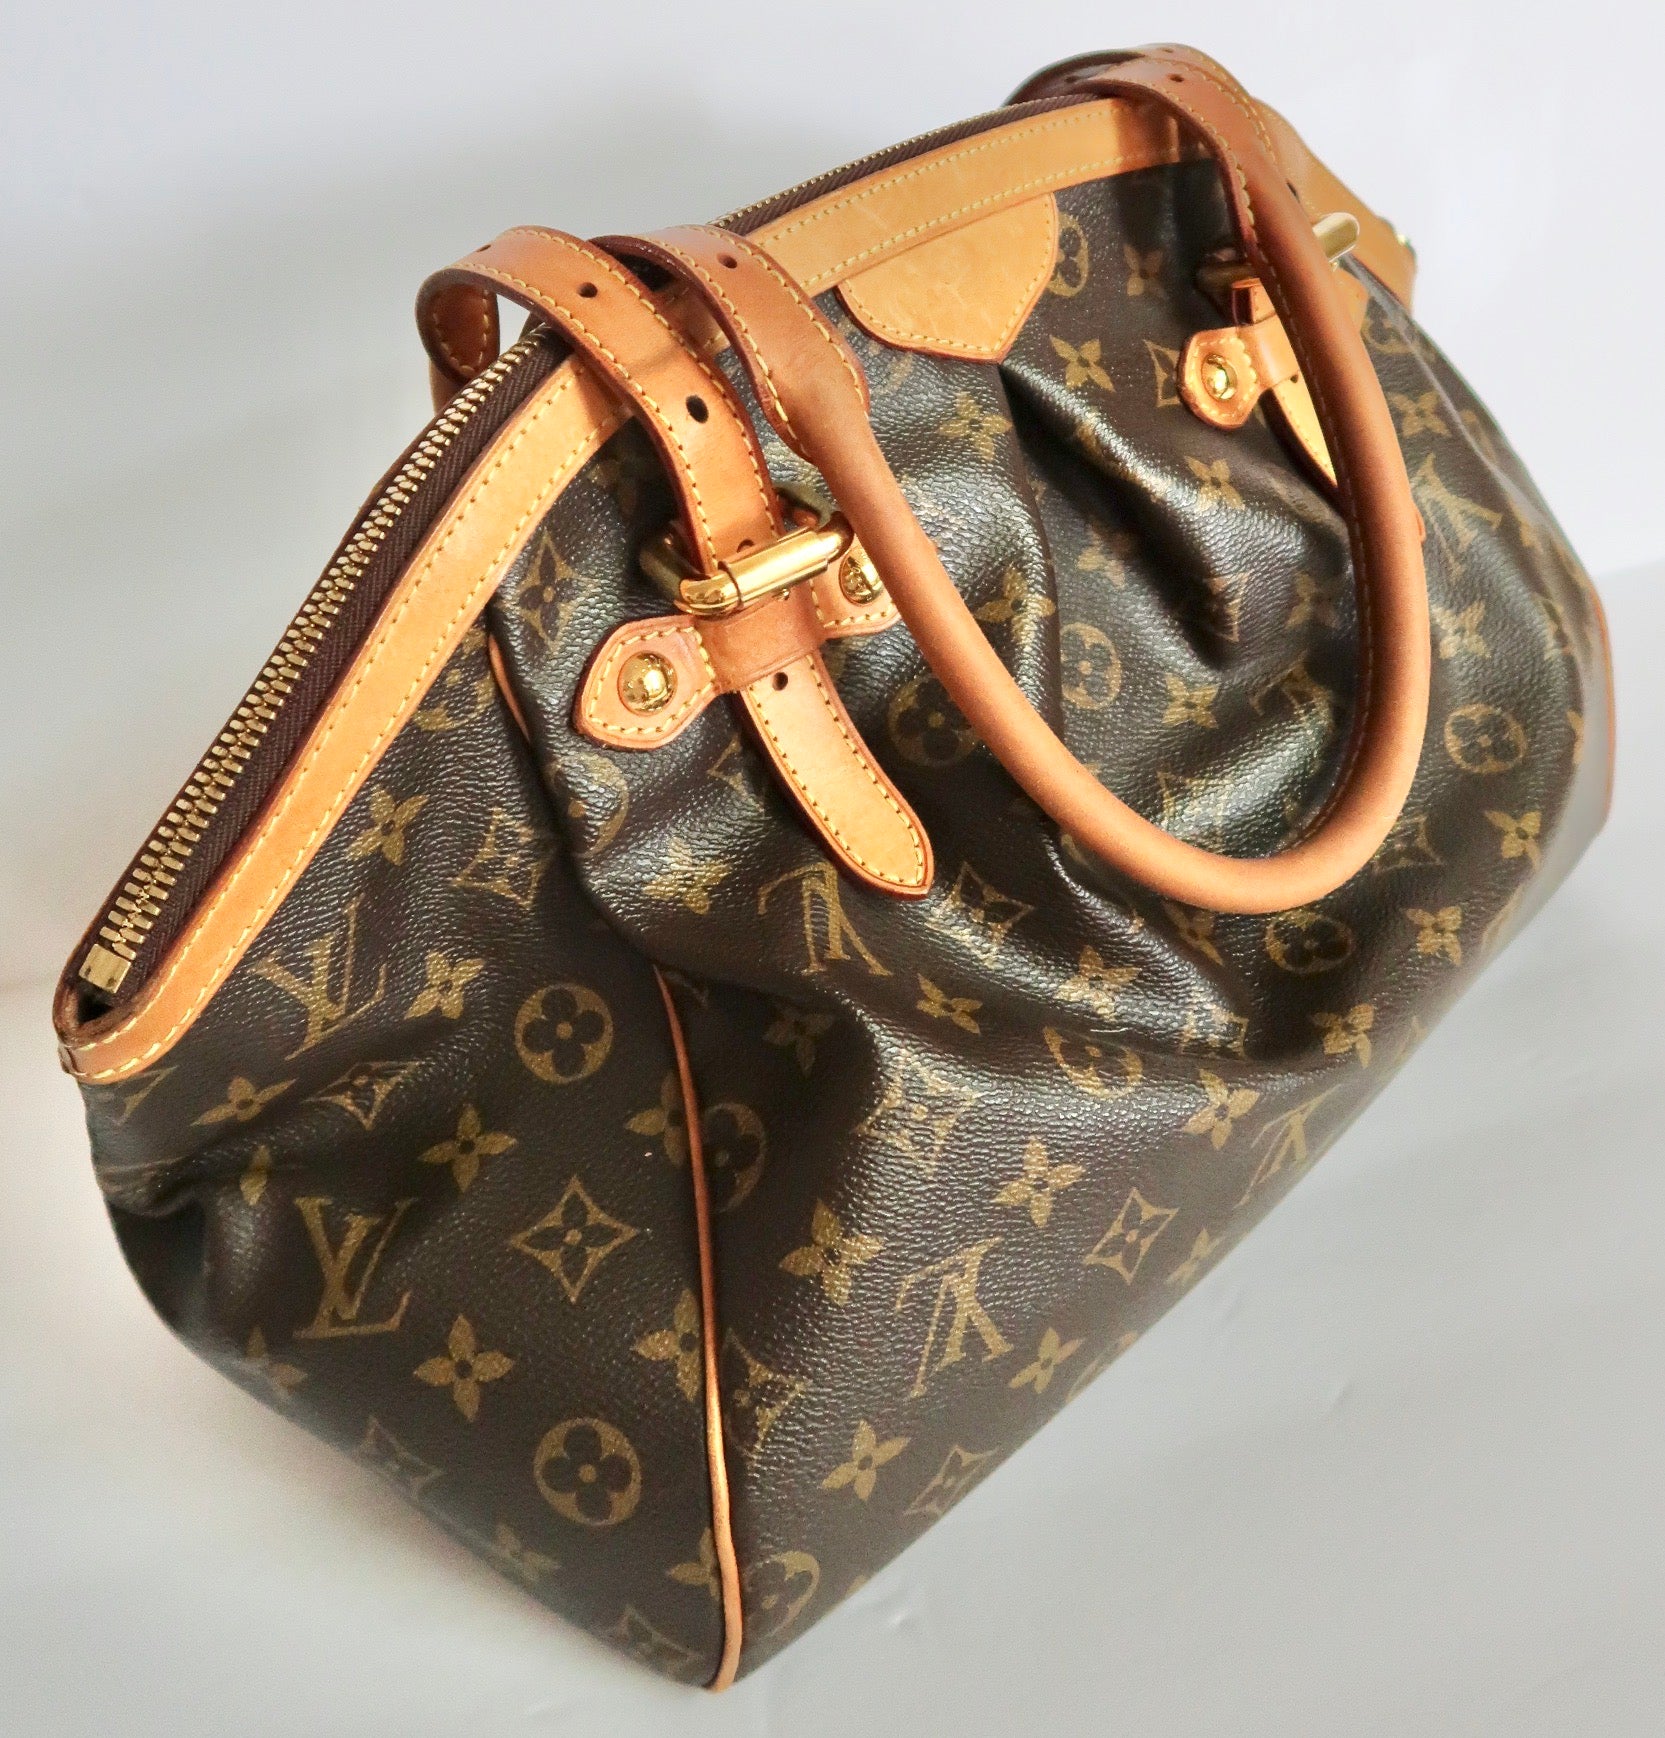 Pre-Owned Louis Vuitton LV Tivoli GM Shoulder Bag 